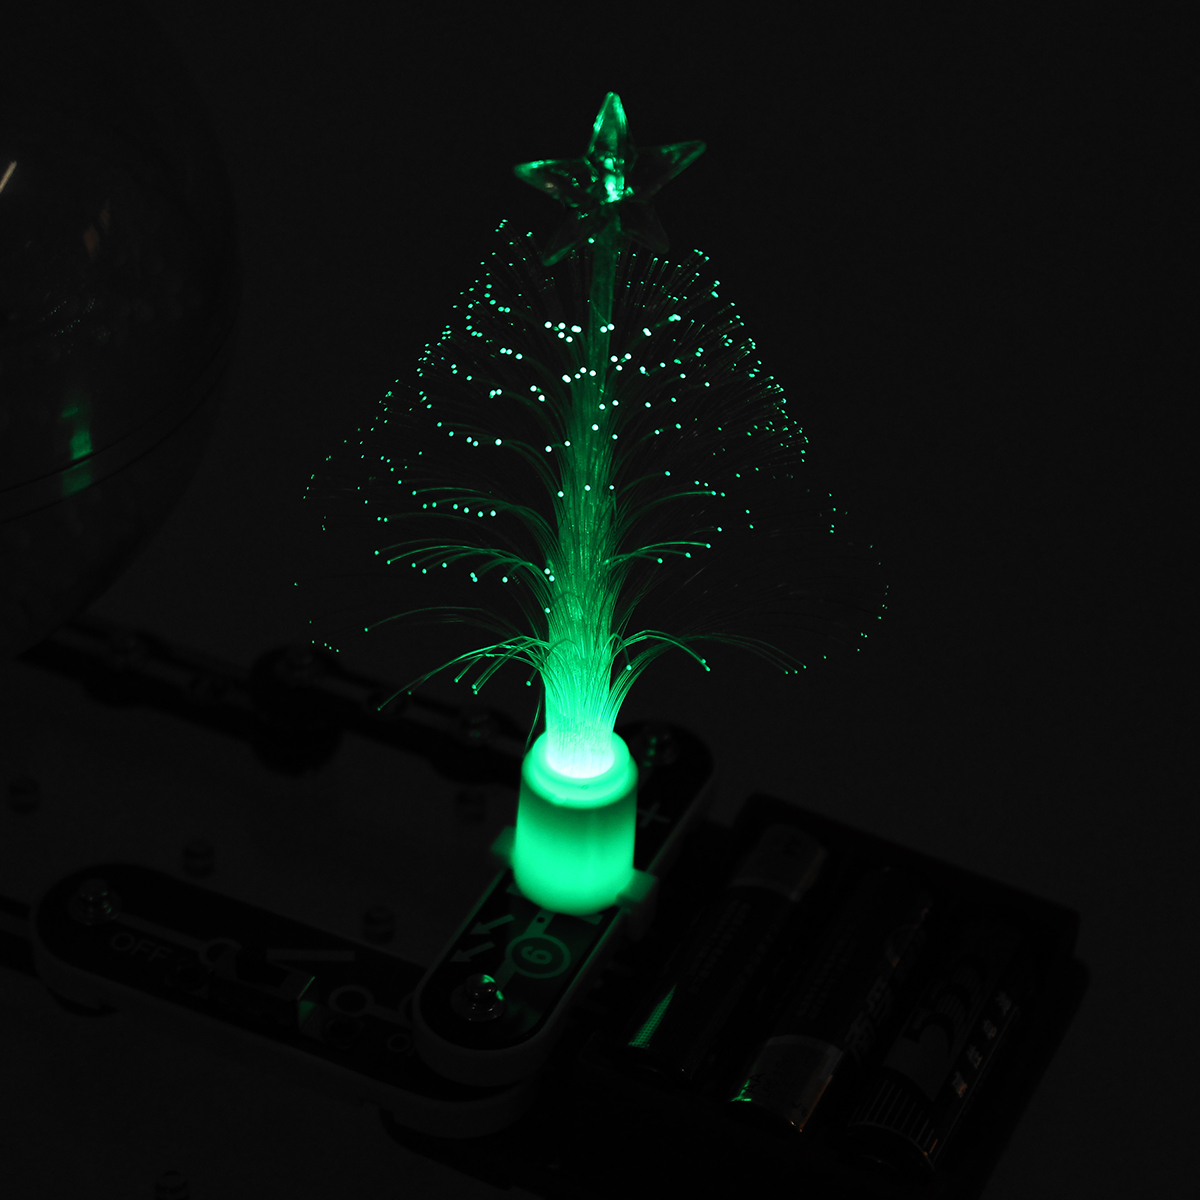 Christmas-Tree-DIY-Toys-Kids-Electronics-Blocks-Educational-Snap-Circuit-Kit-Discovery-Science-1599054